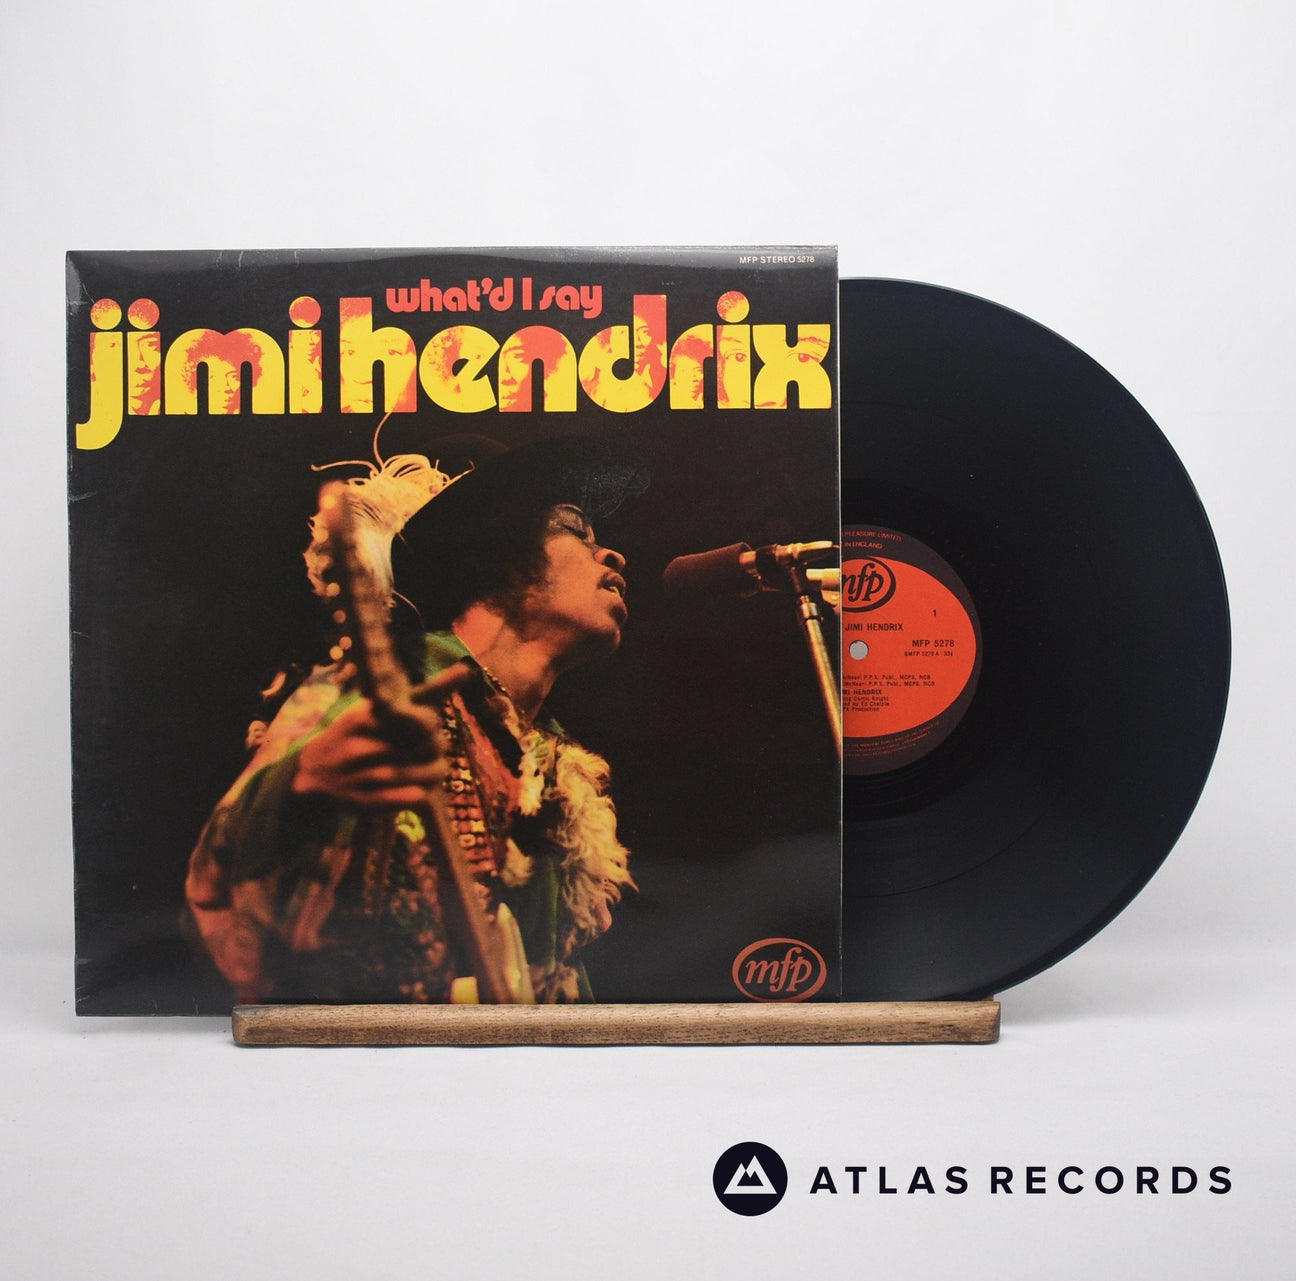 Jimi Hendrix What'd I Say LP Vinyl Record - Front Cover & Record